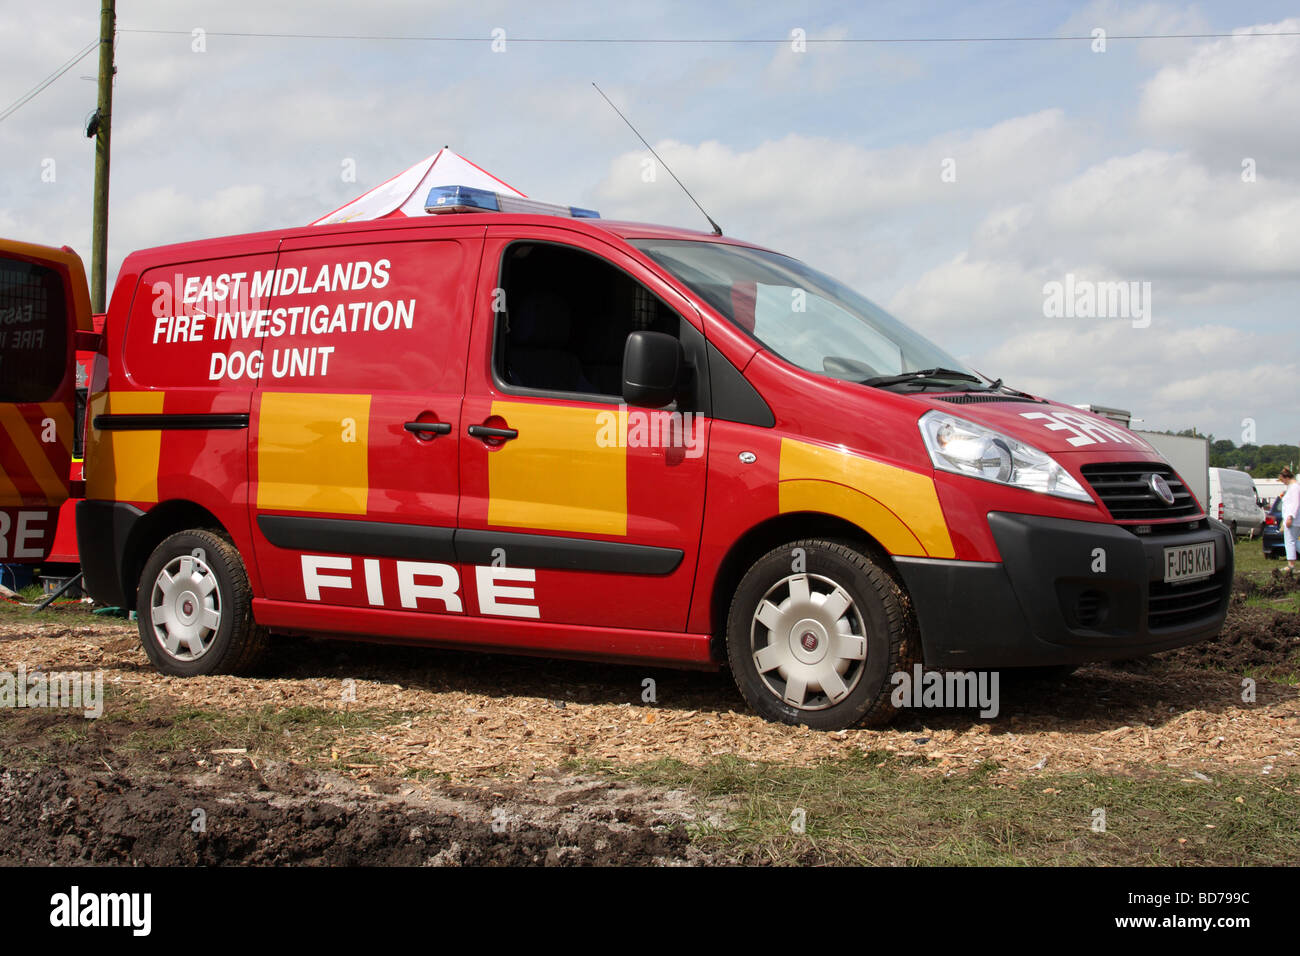 A fire investigation dog unit in the U.K. Stock Photo